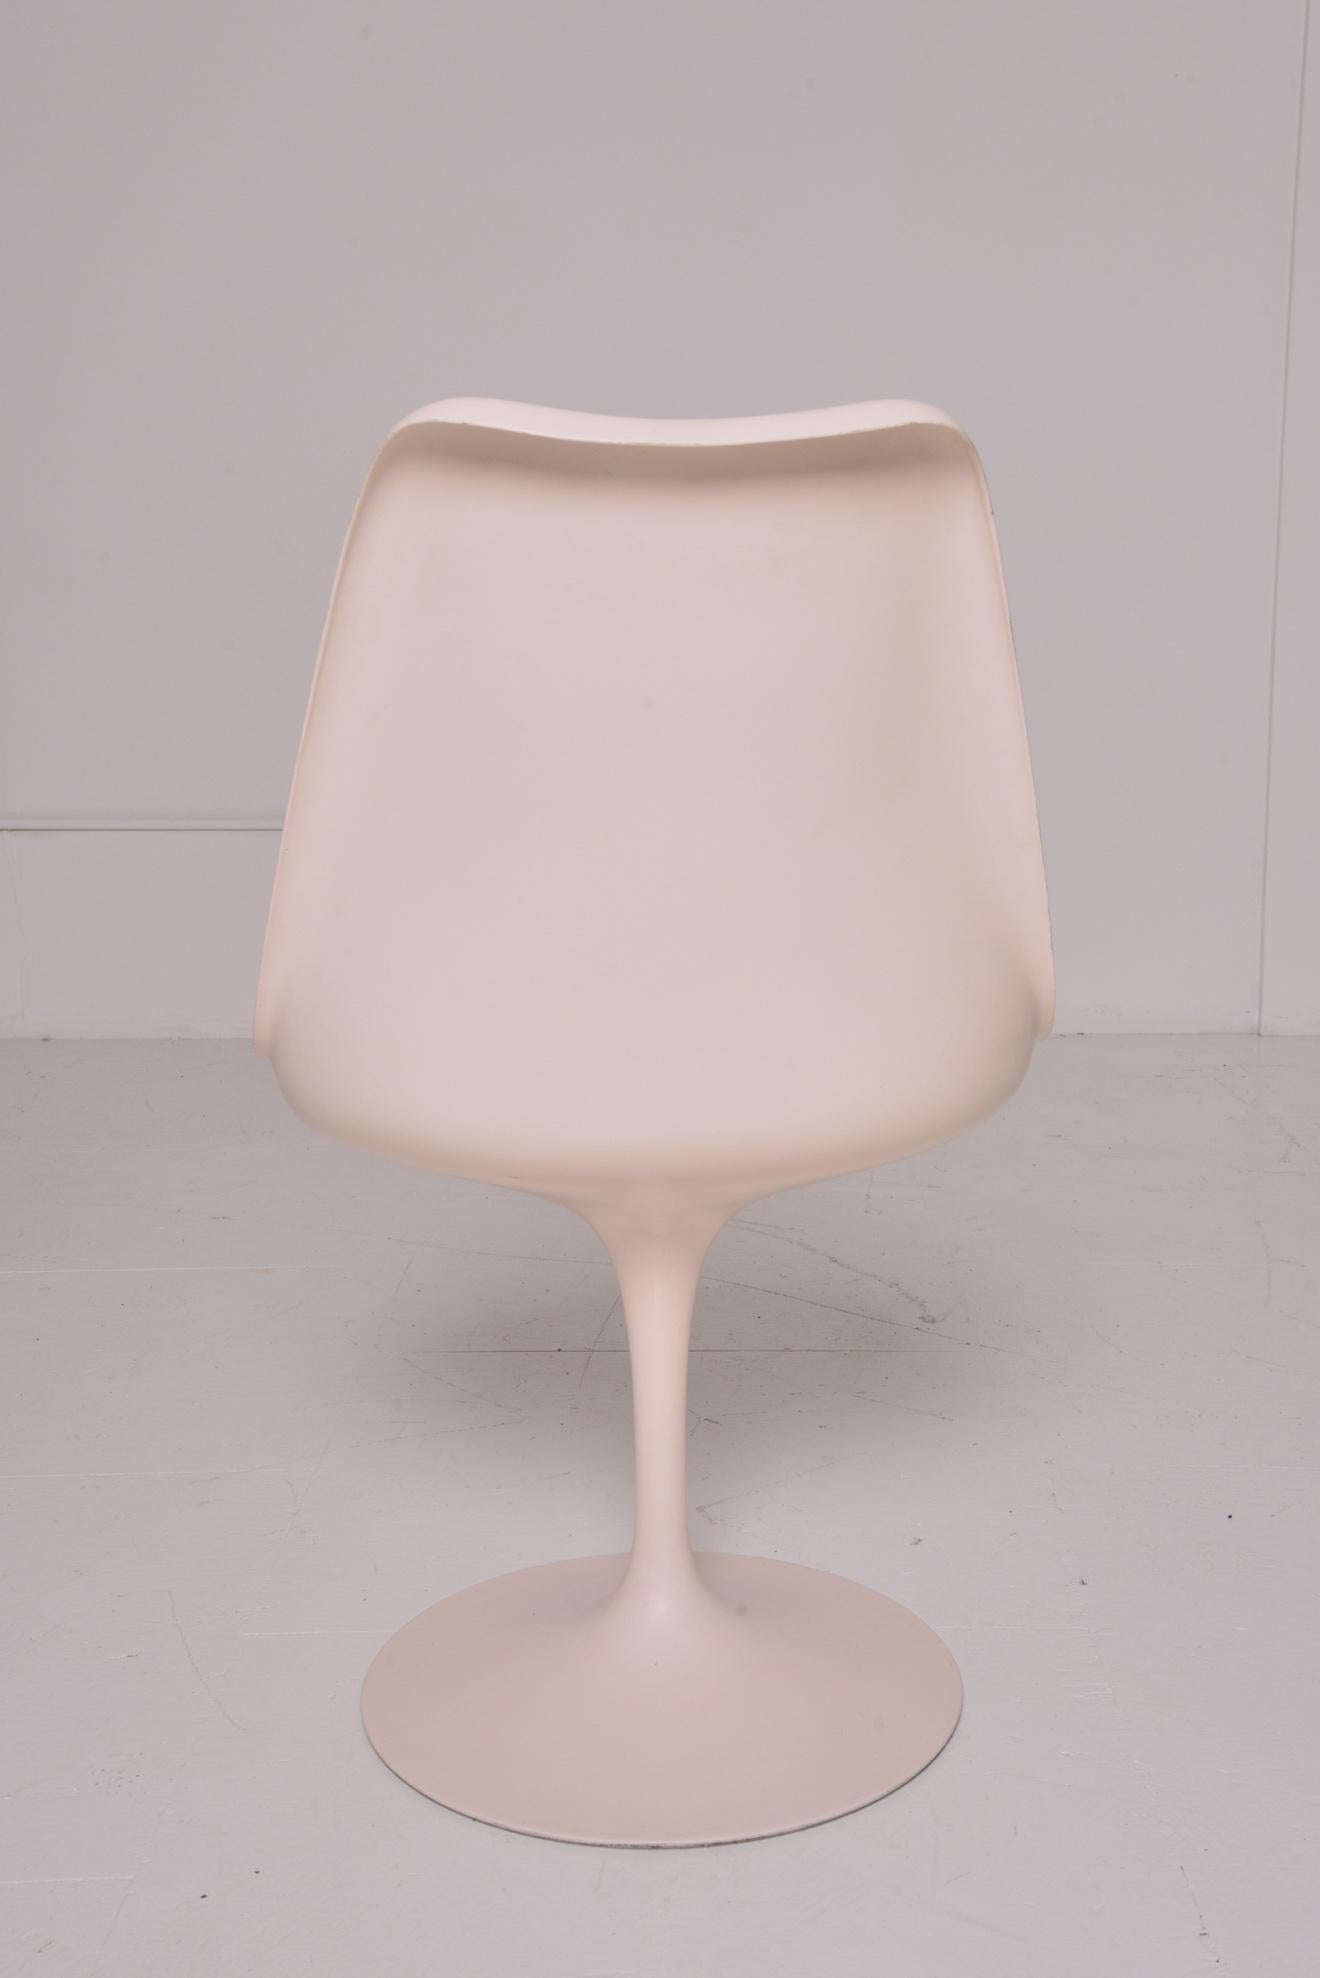 Italian Authentic Early Knoll Eero Saarinen Tulip Chairs in Black Leather Seat Cushion